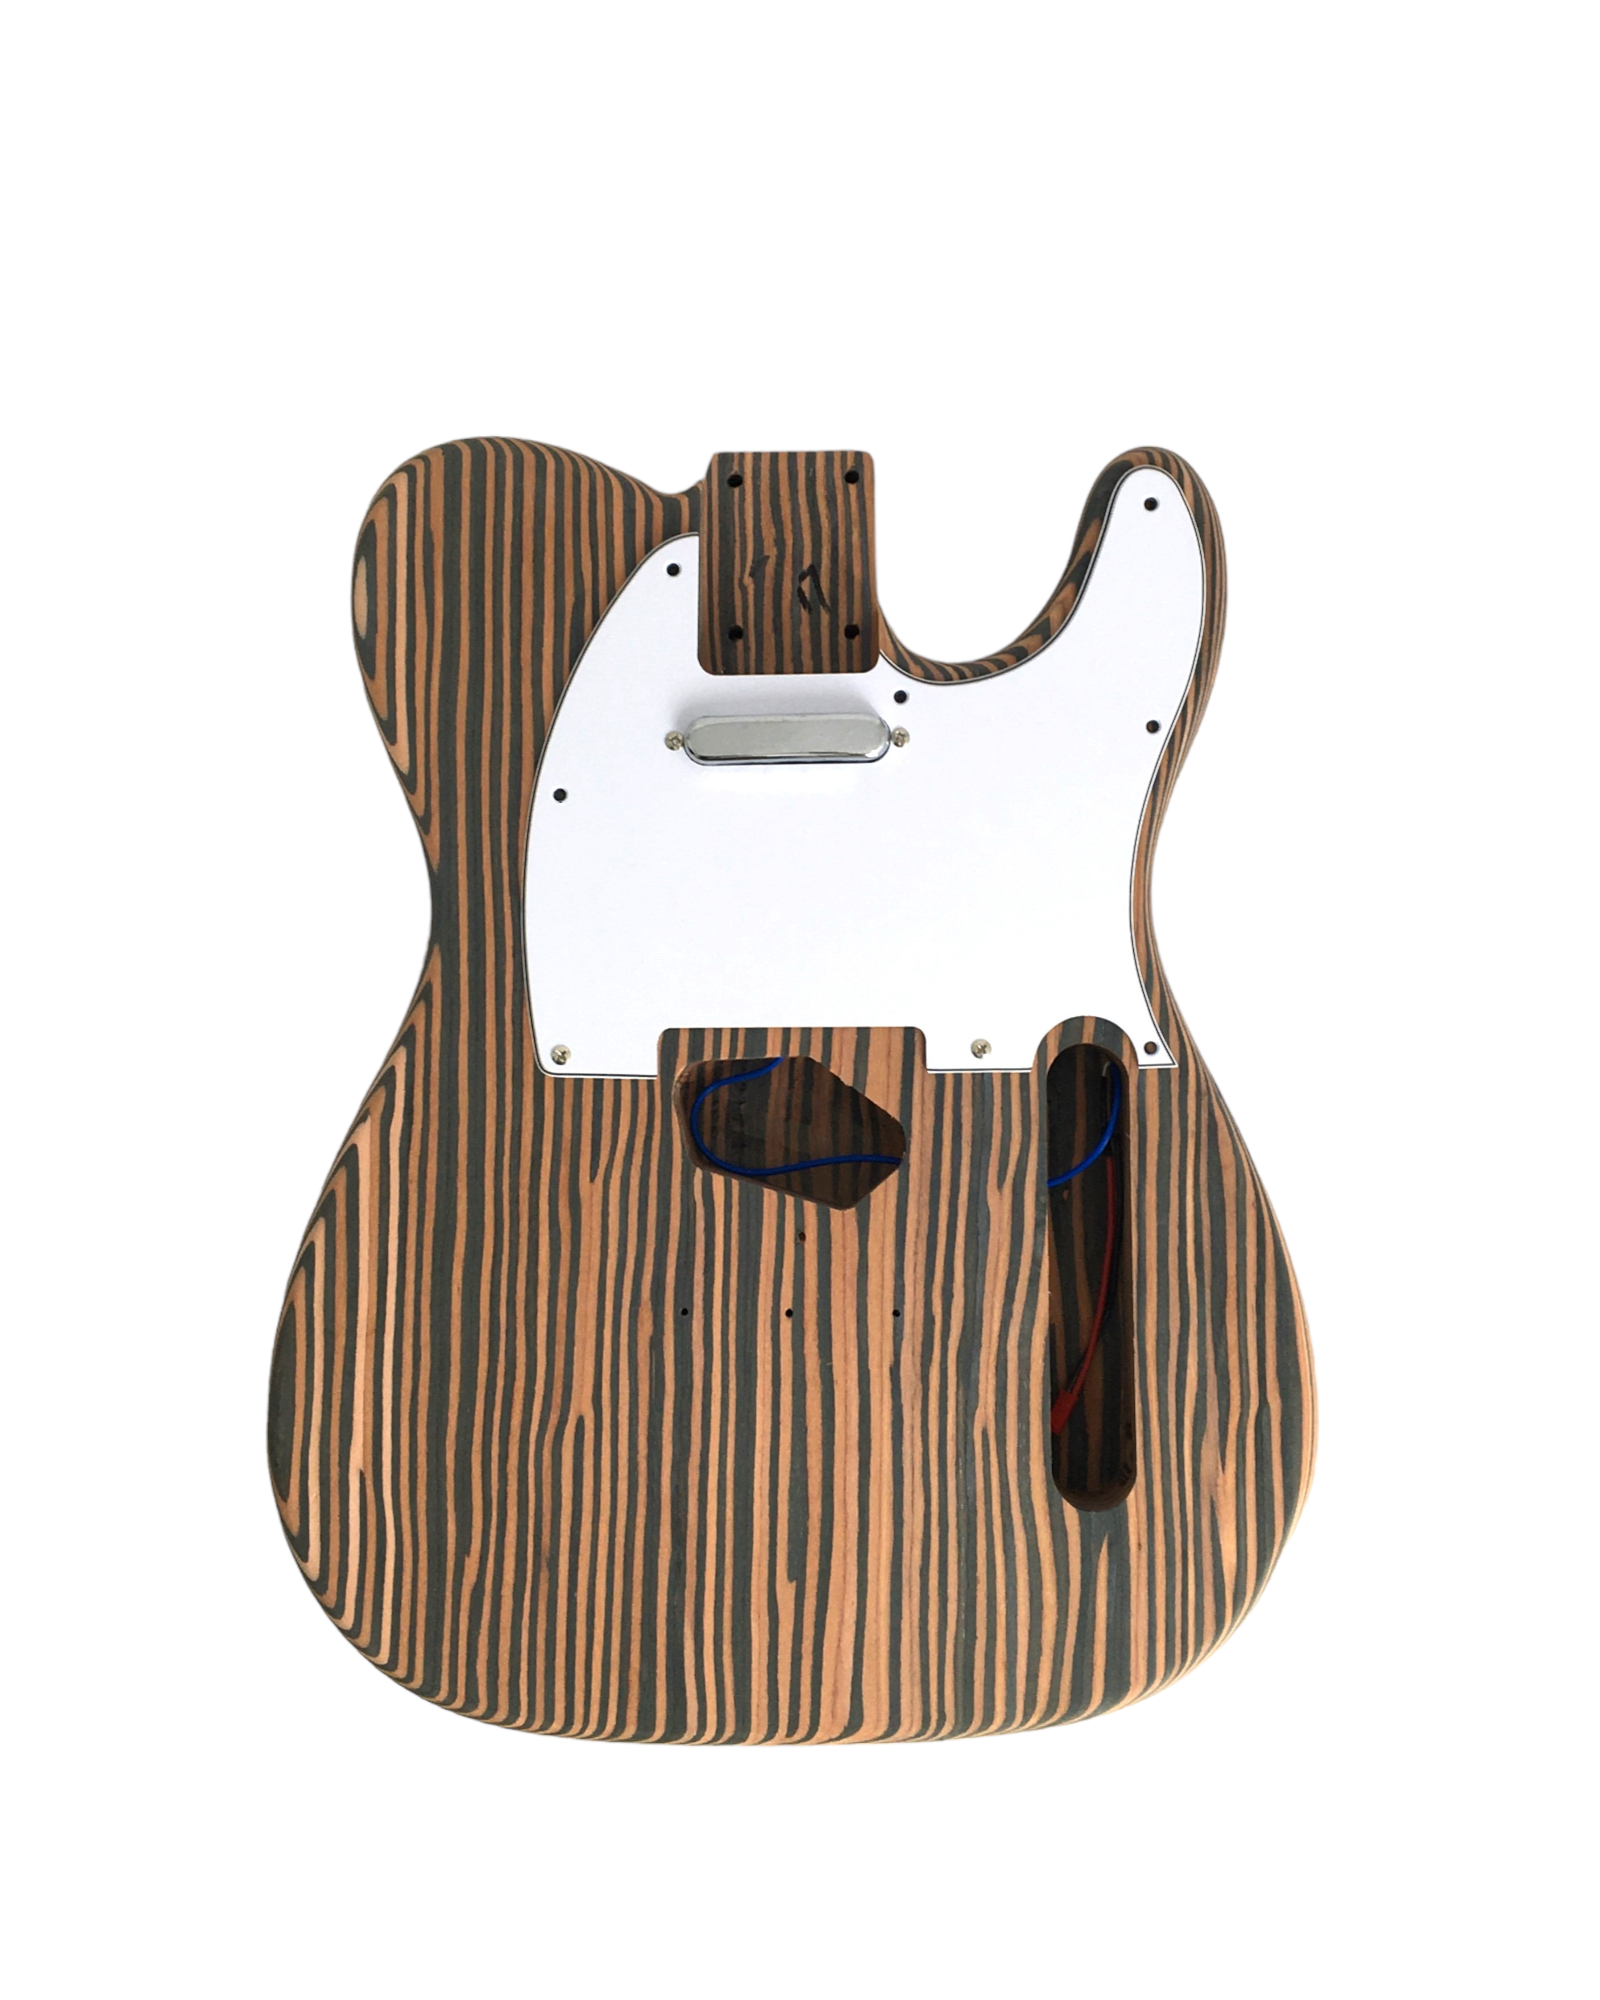 E500TLDIY Technical ZebraWood Body+Neck, No-Soldering Electric Guitar DIY Kit